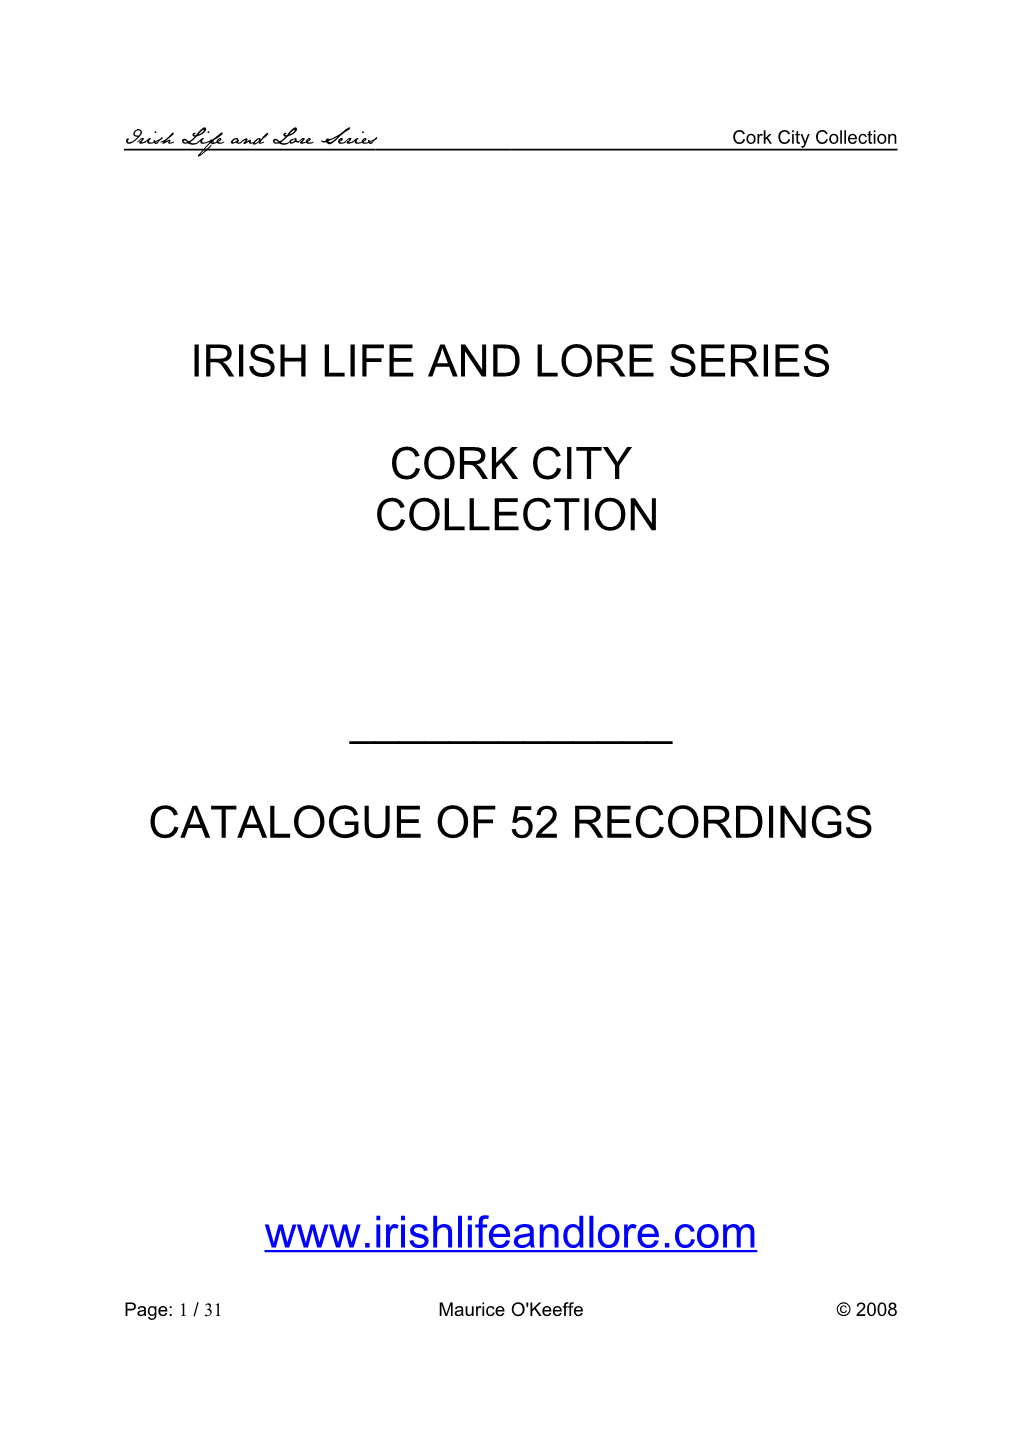 Irish Life and Lore Series Cork City Collection